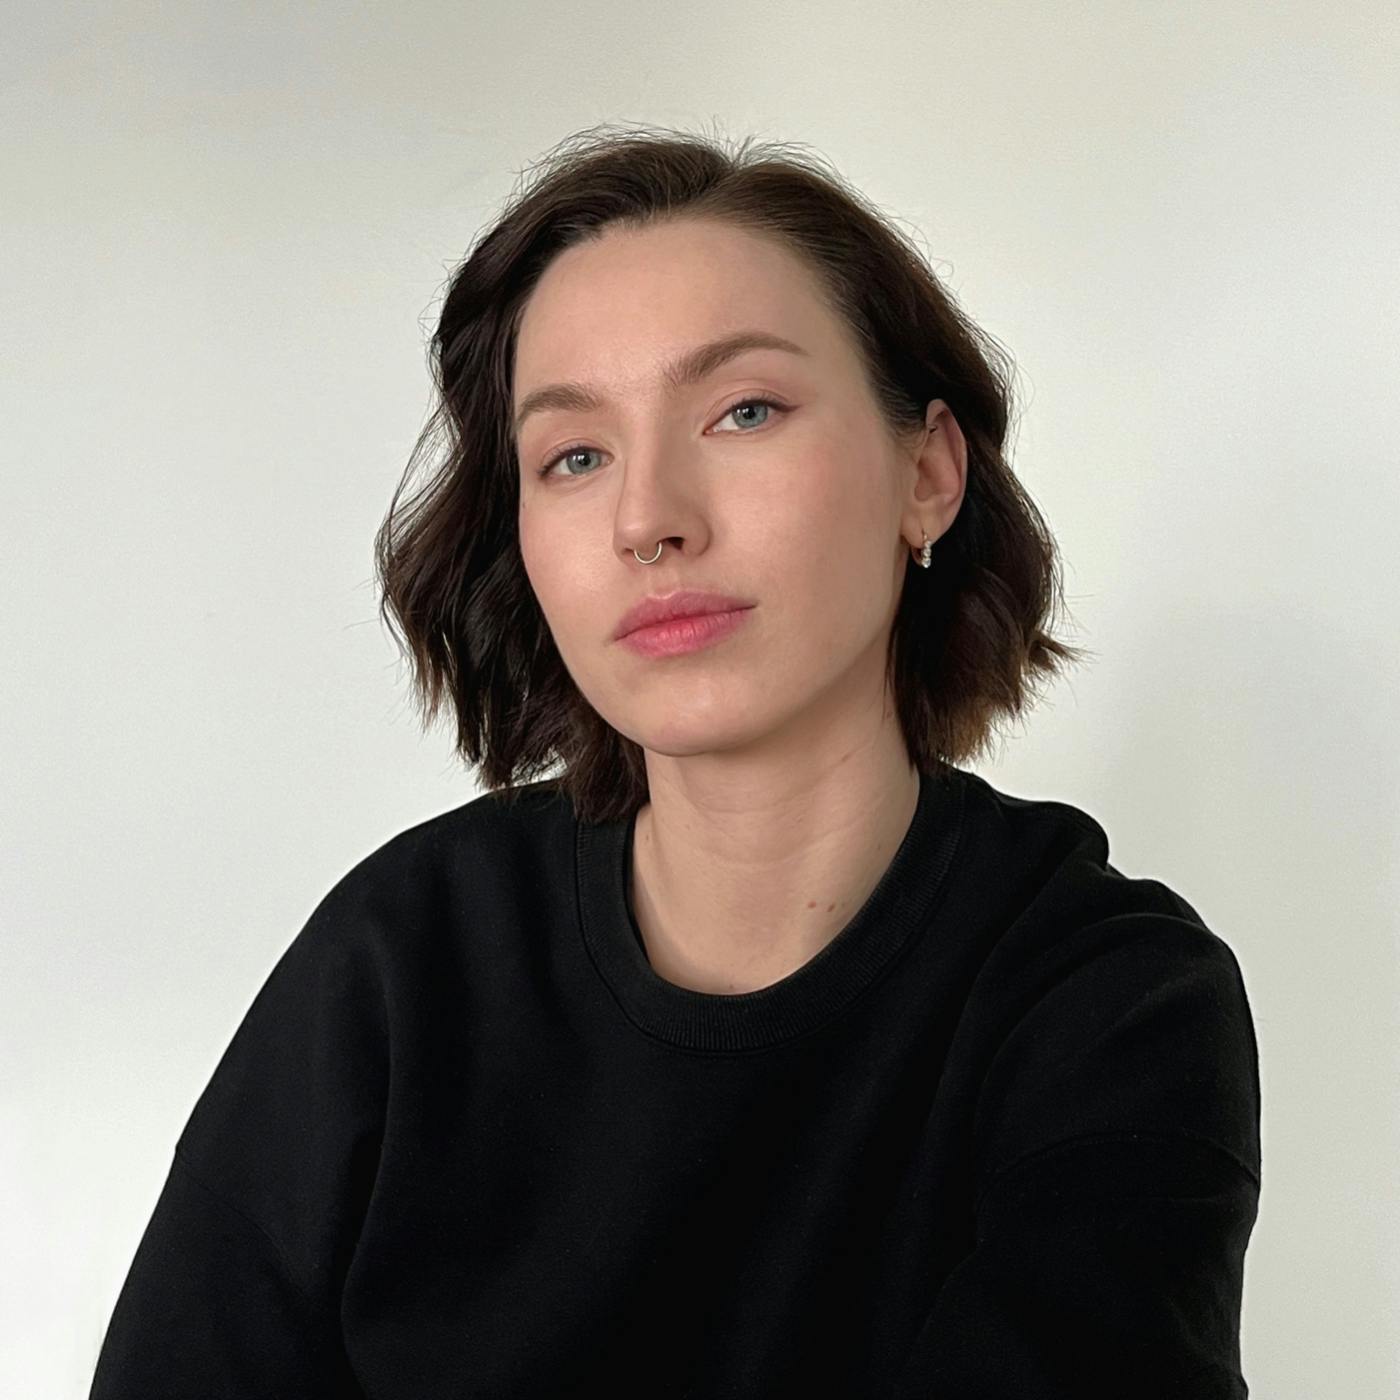 /elena-shabanova-senior-product-designer-at-polyai-women-in-tech-interview feature image